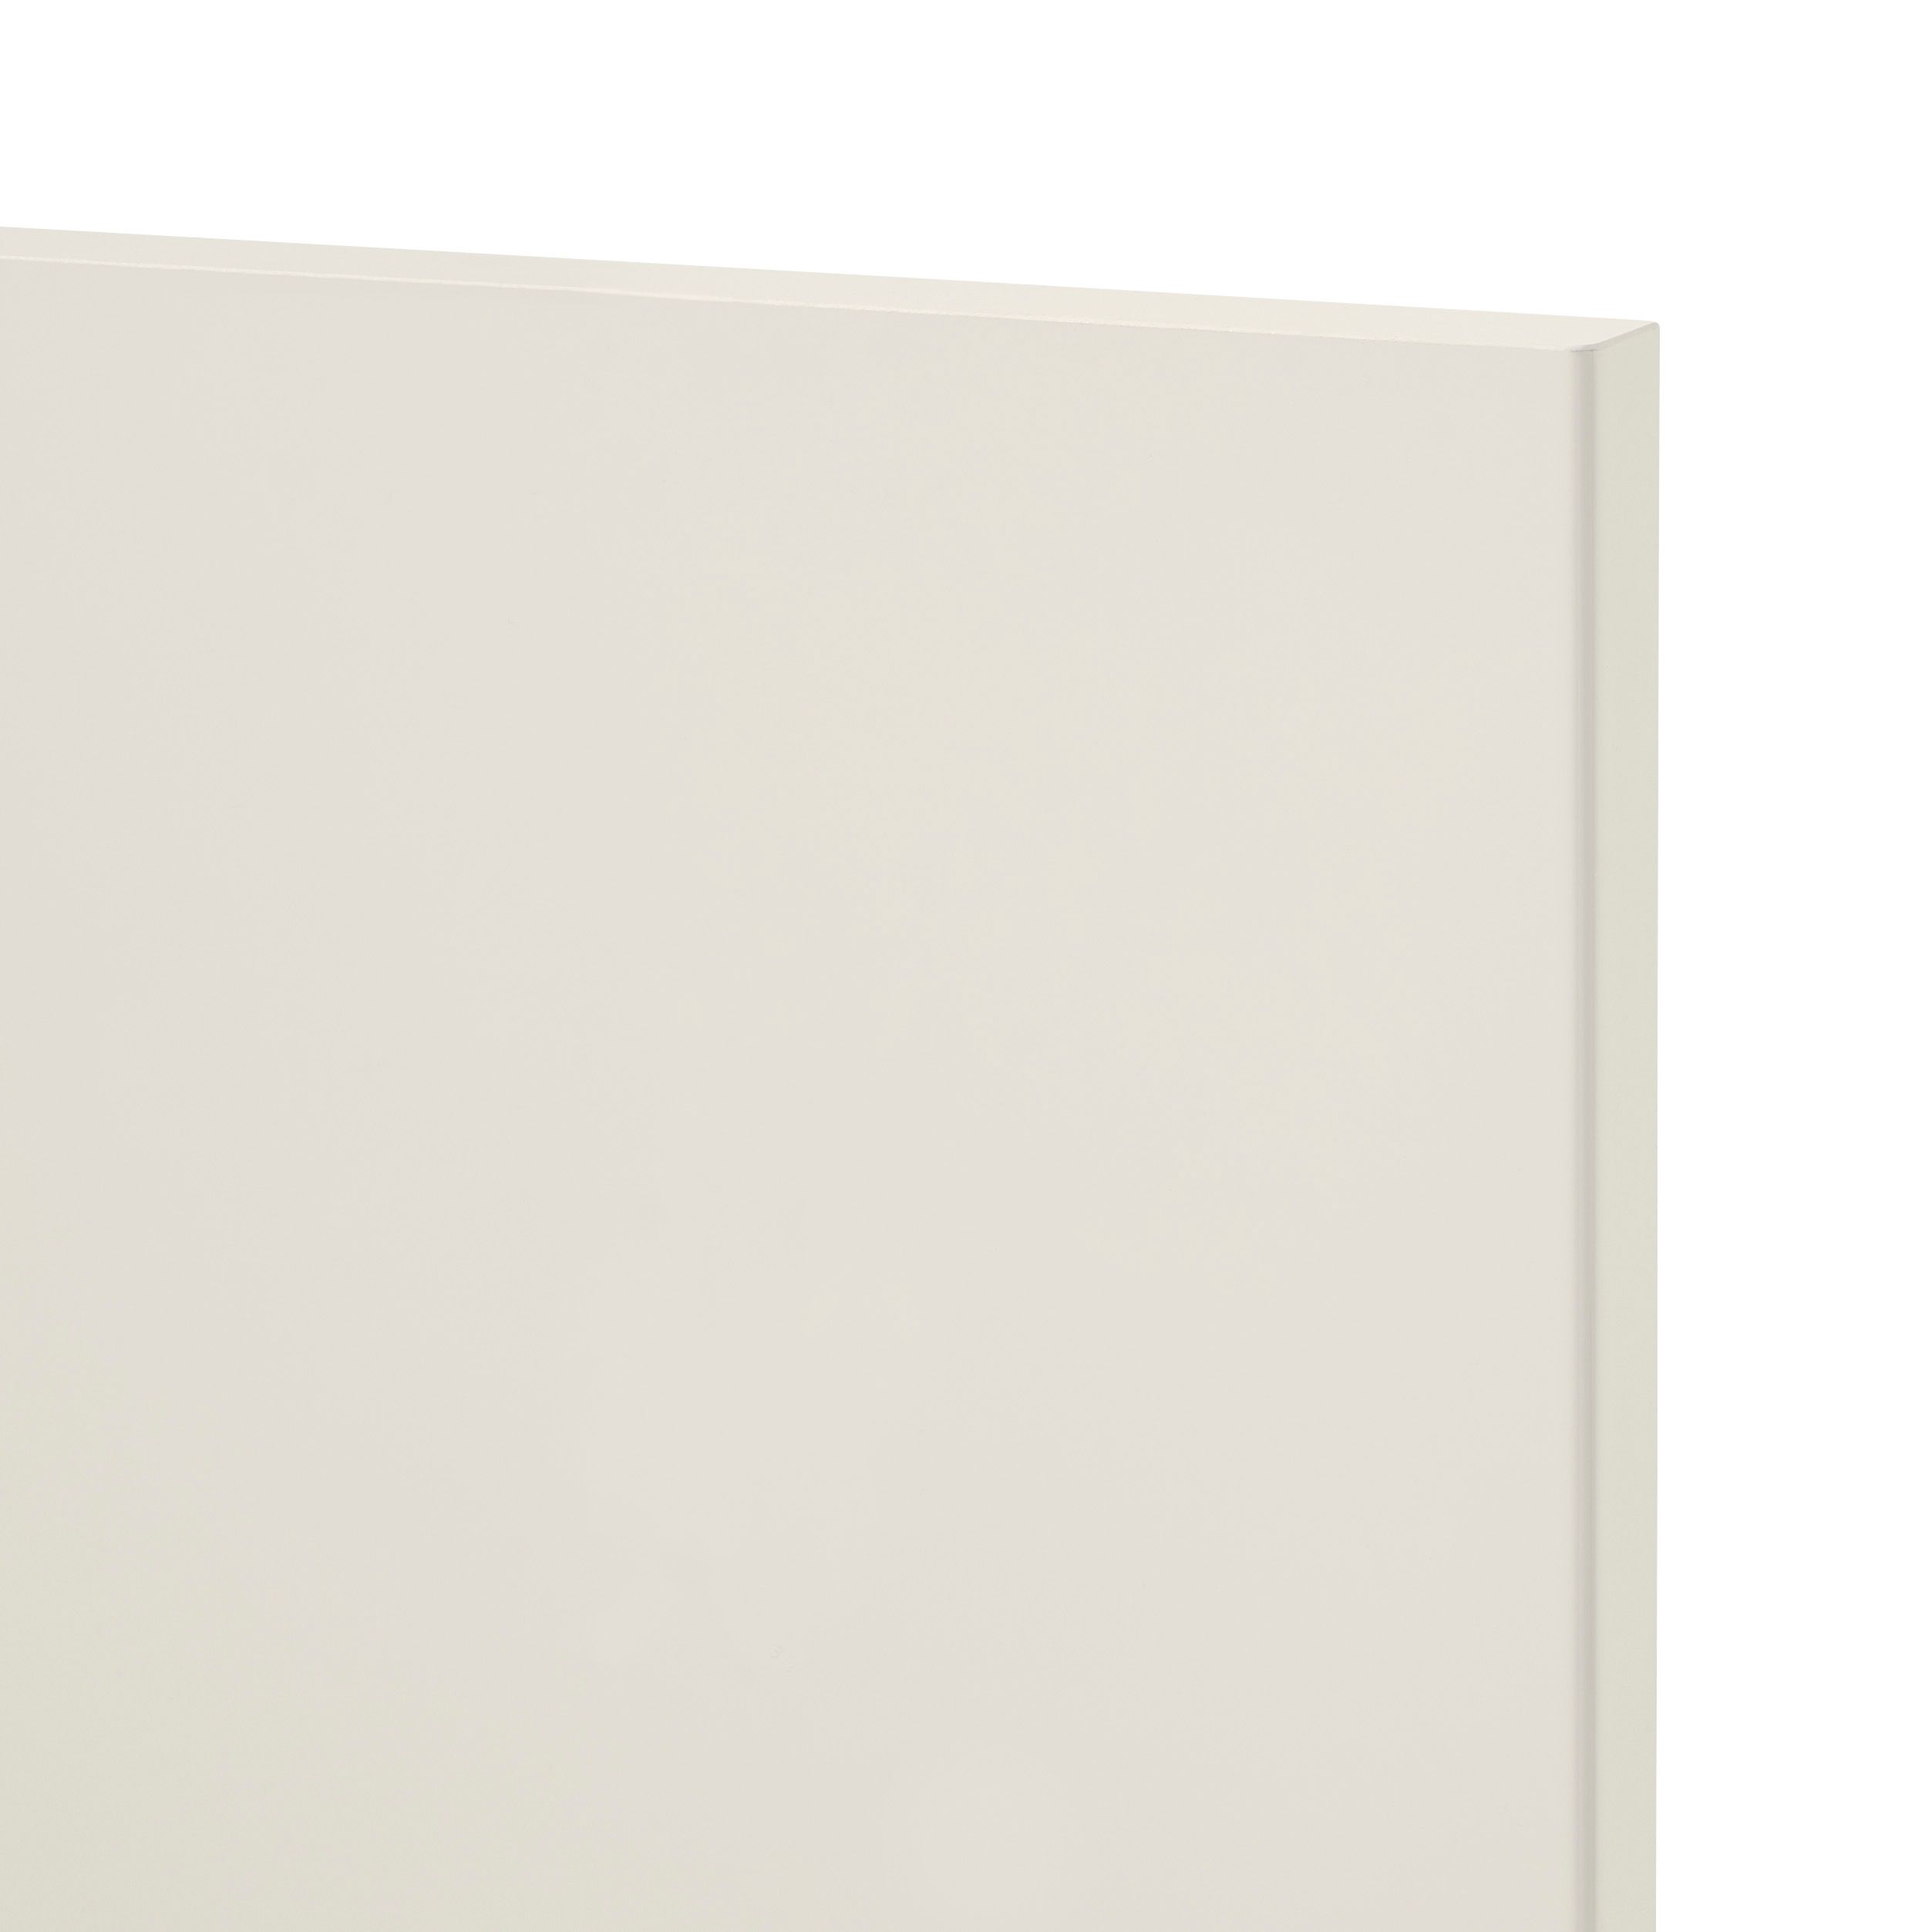 GoodHome Stevia Gloss cream slab Appliance Cabinet door (W)600mm (H)453mm (T)18mm